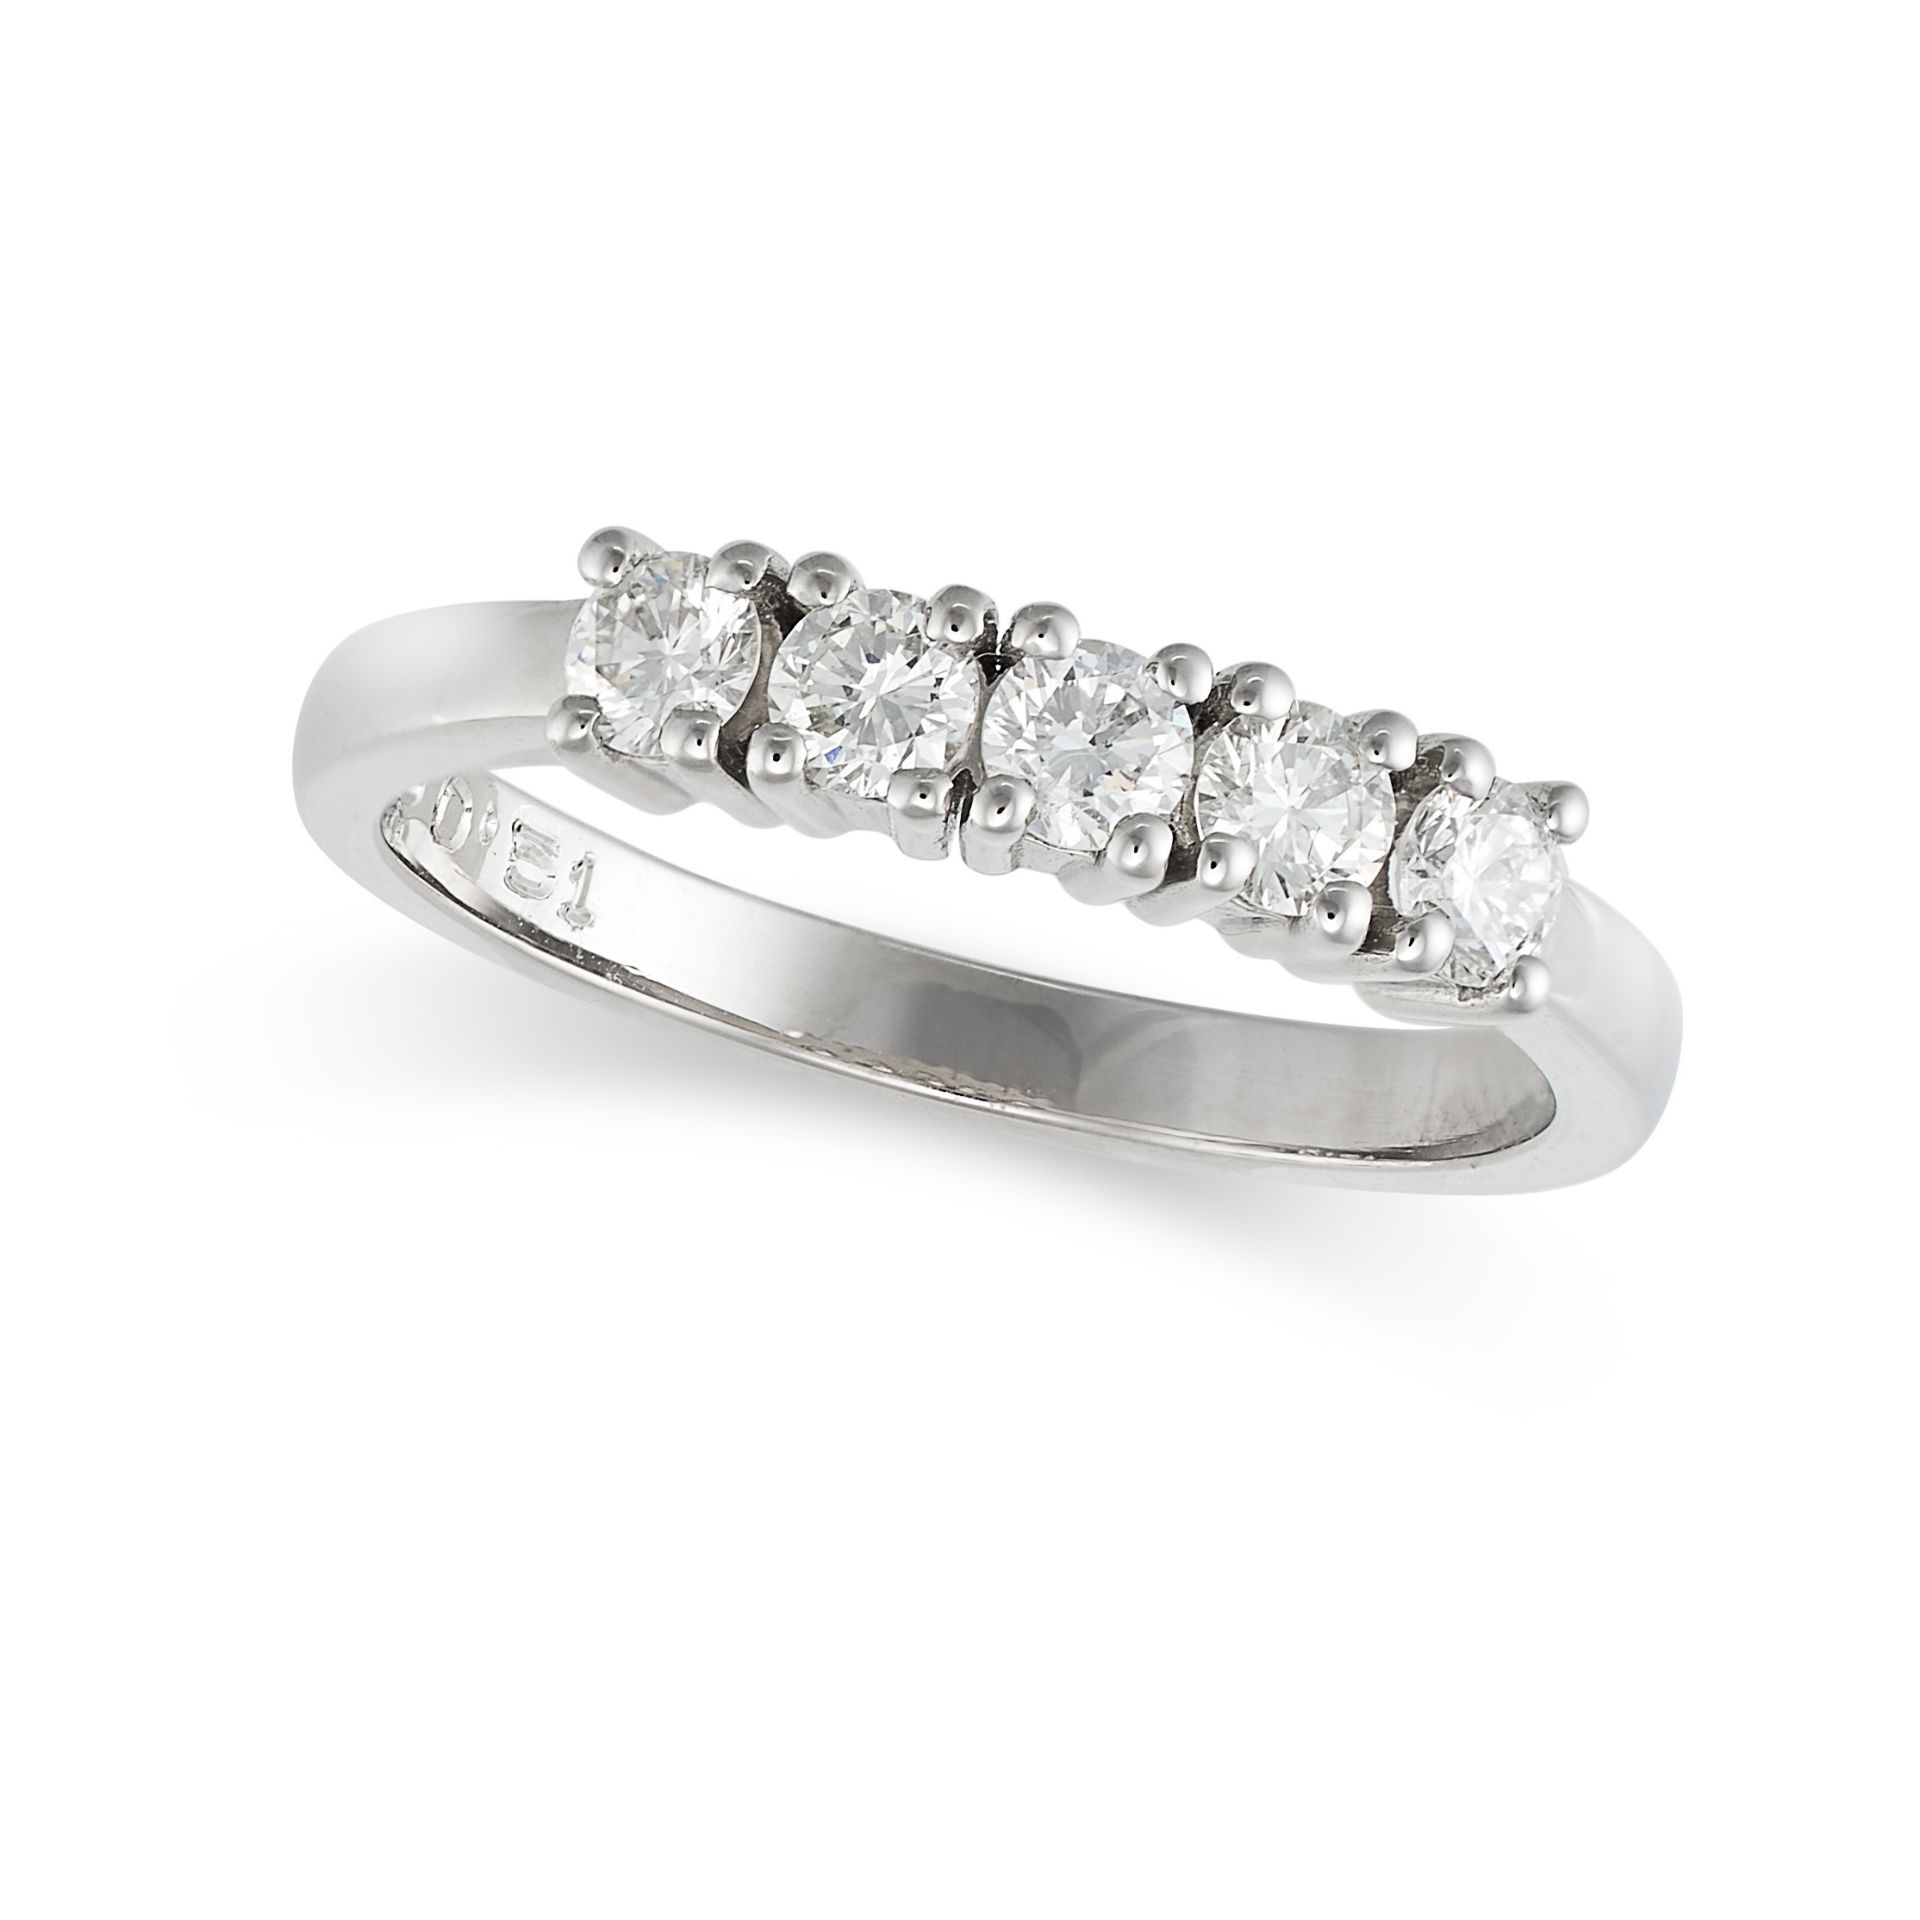 A DIAMOND FIVE STONE RING in platinum, set with five round brilliant cut diamonds, the diamonds a...